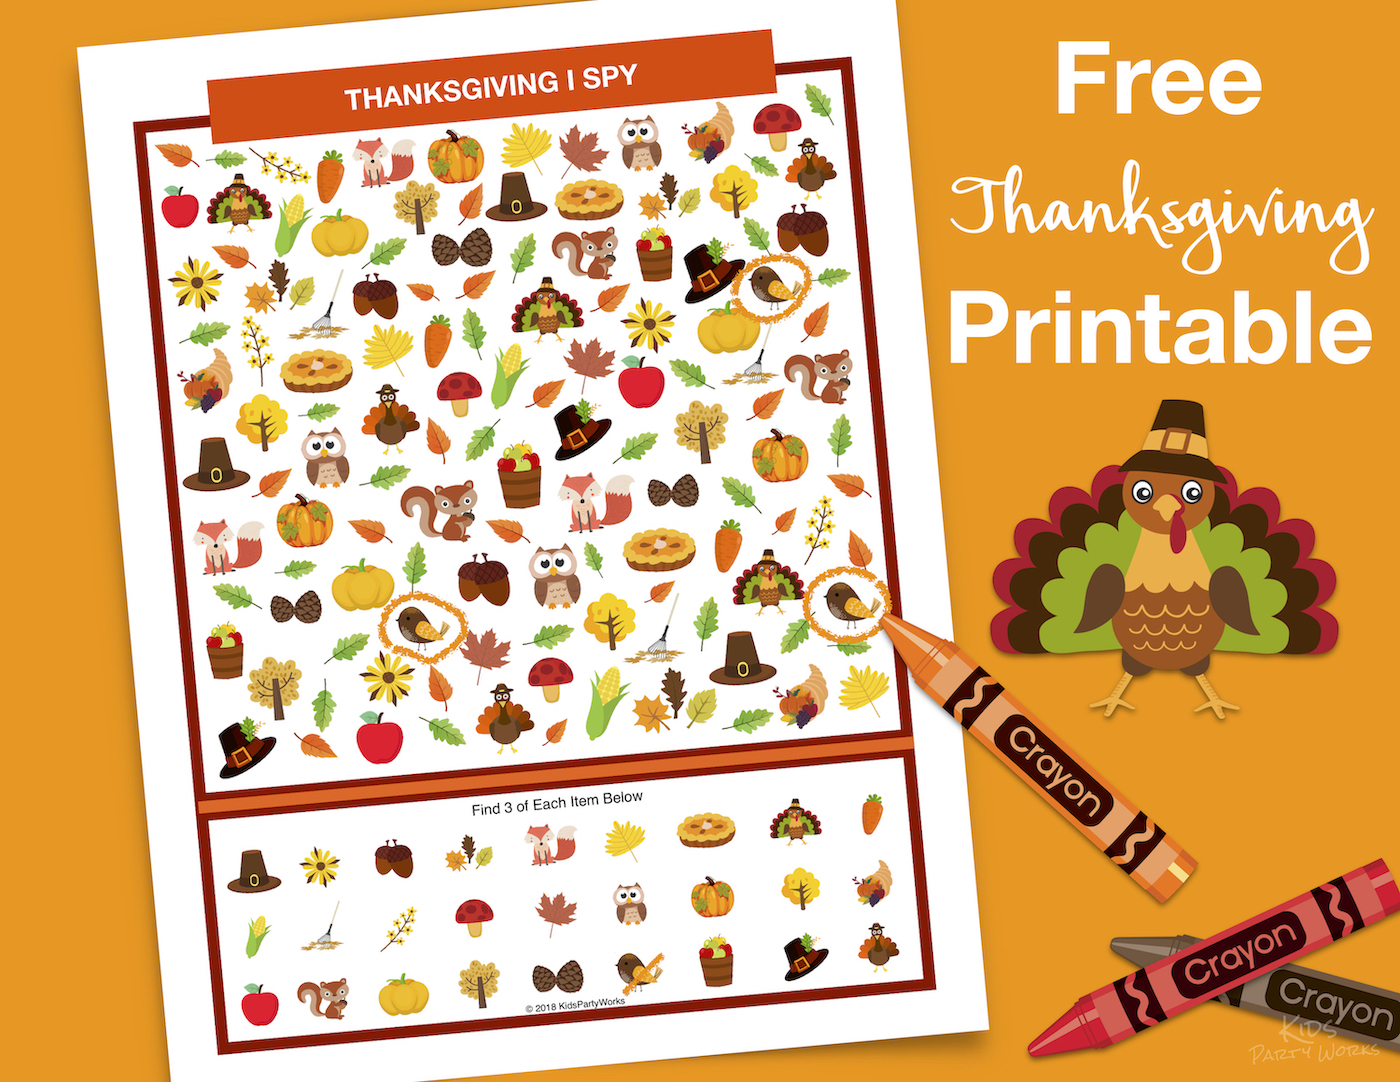 Free Thanksgiving printable